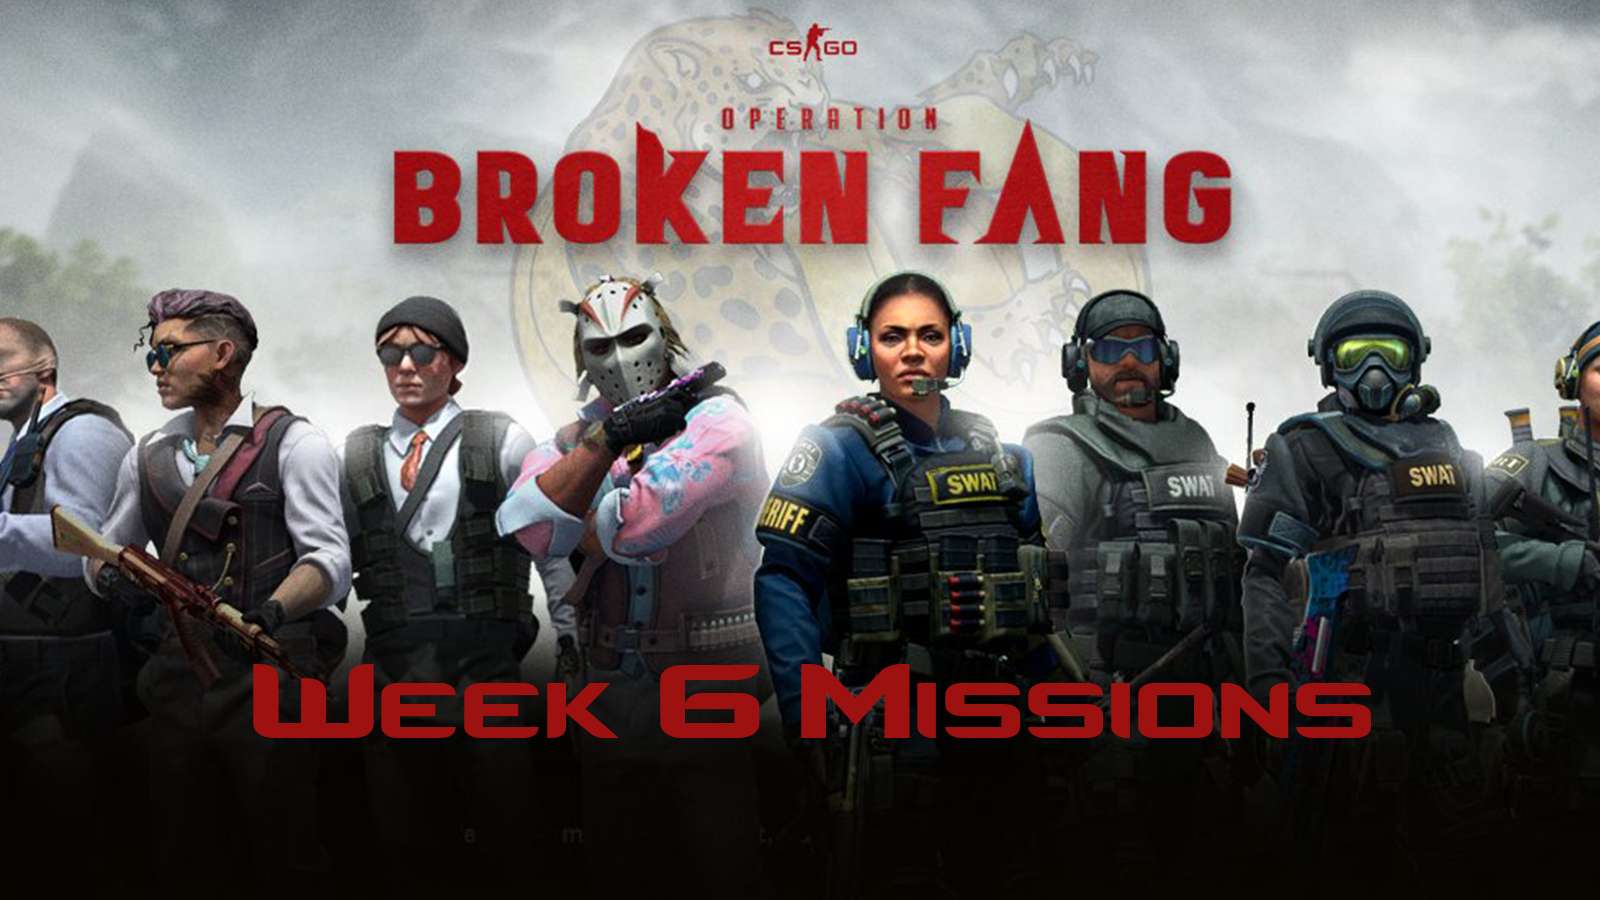 CSGO Operation Broken Fang Week 6